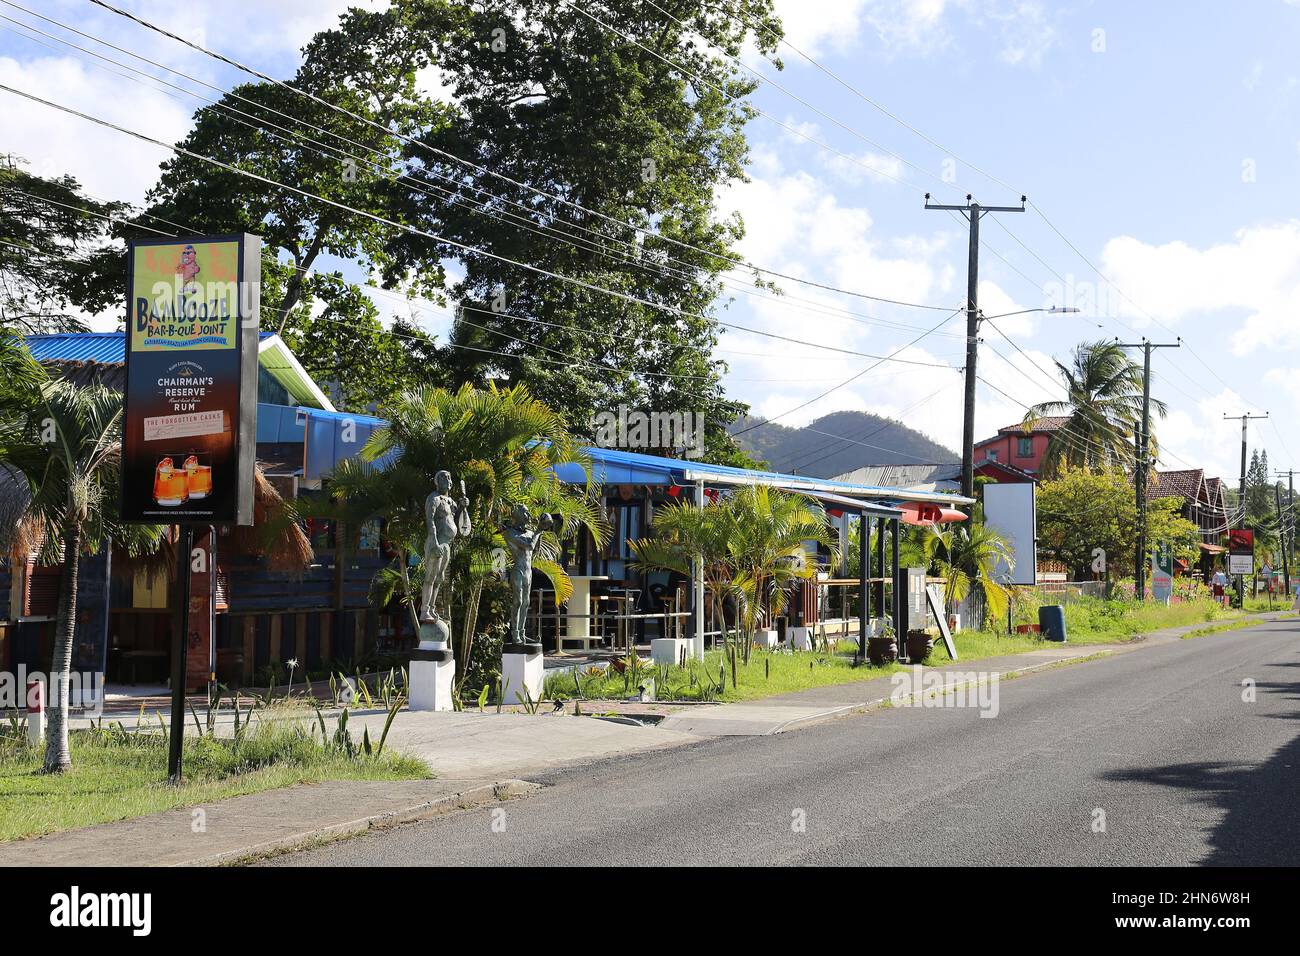 Bambooze Bar-B-Que Joint, Reduit Beach Avenue, Rodney Bay Village, Gros Islet, Saint Lucia, Windward Islands, Lesser Antilles, West Indies, Caribbean Stock Photo